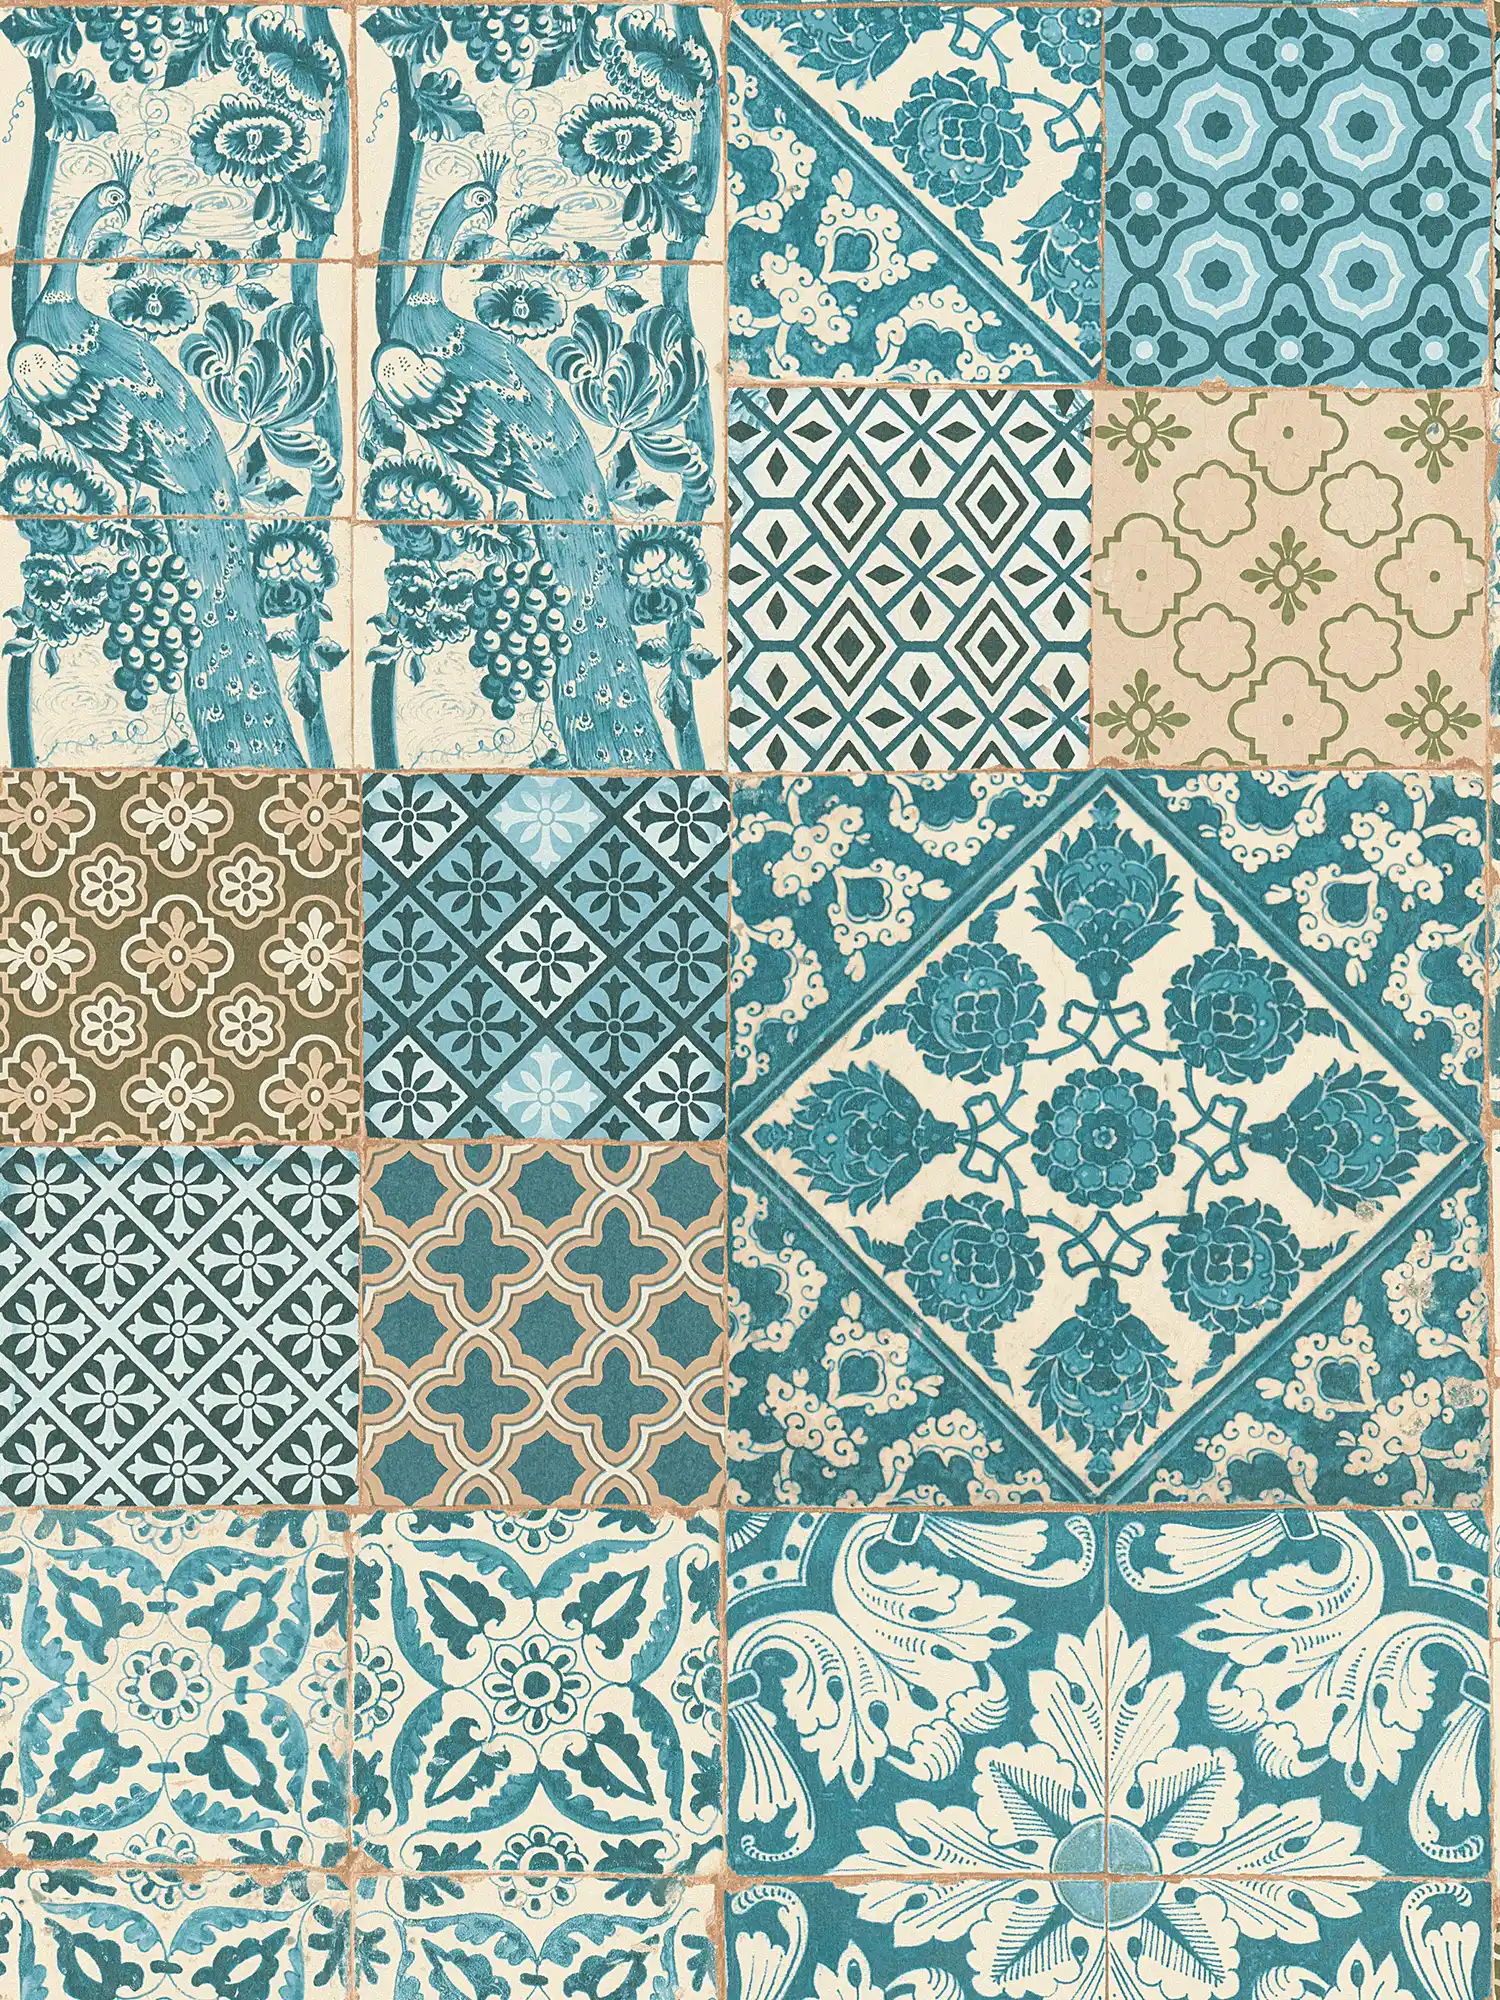         Wallpaper in tile & mosaic design - blue, green, brown
    